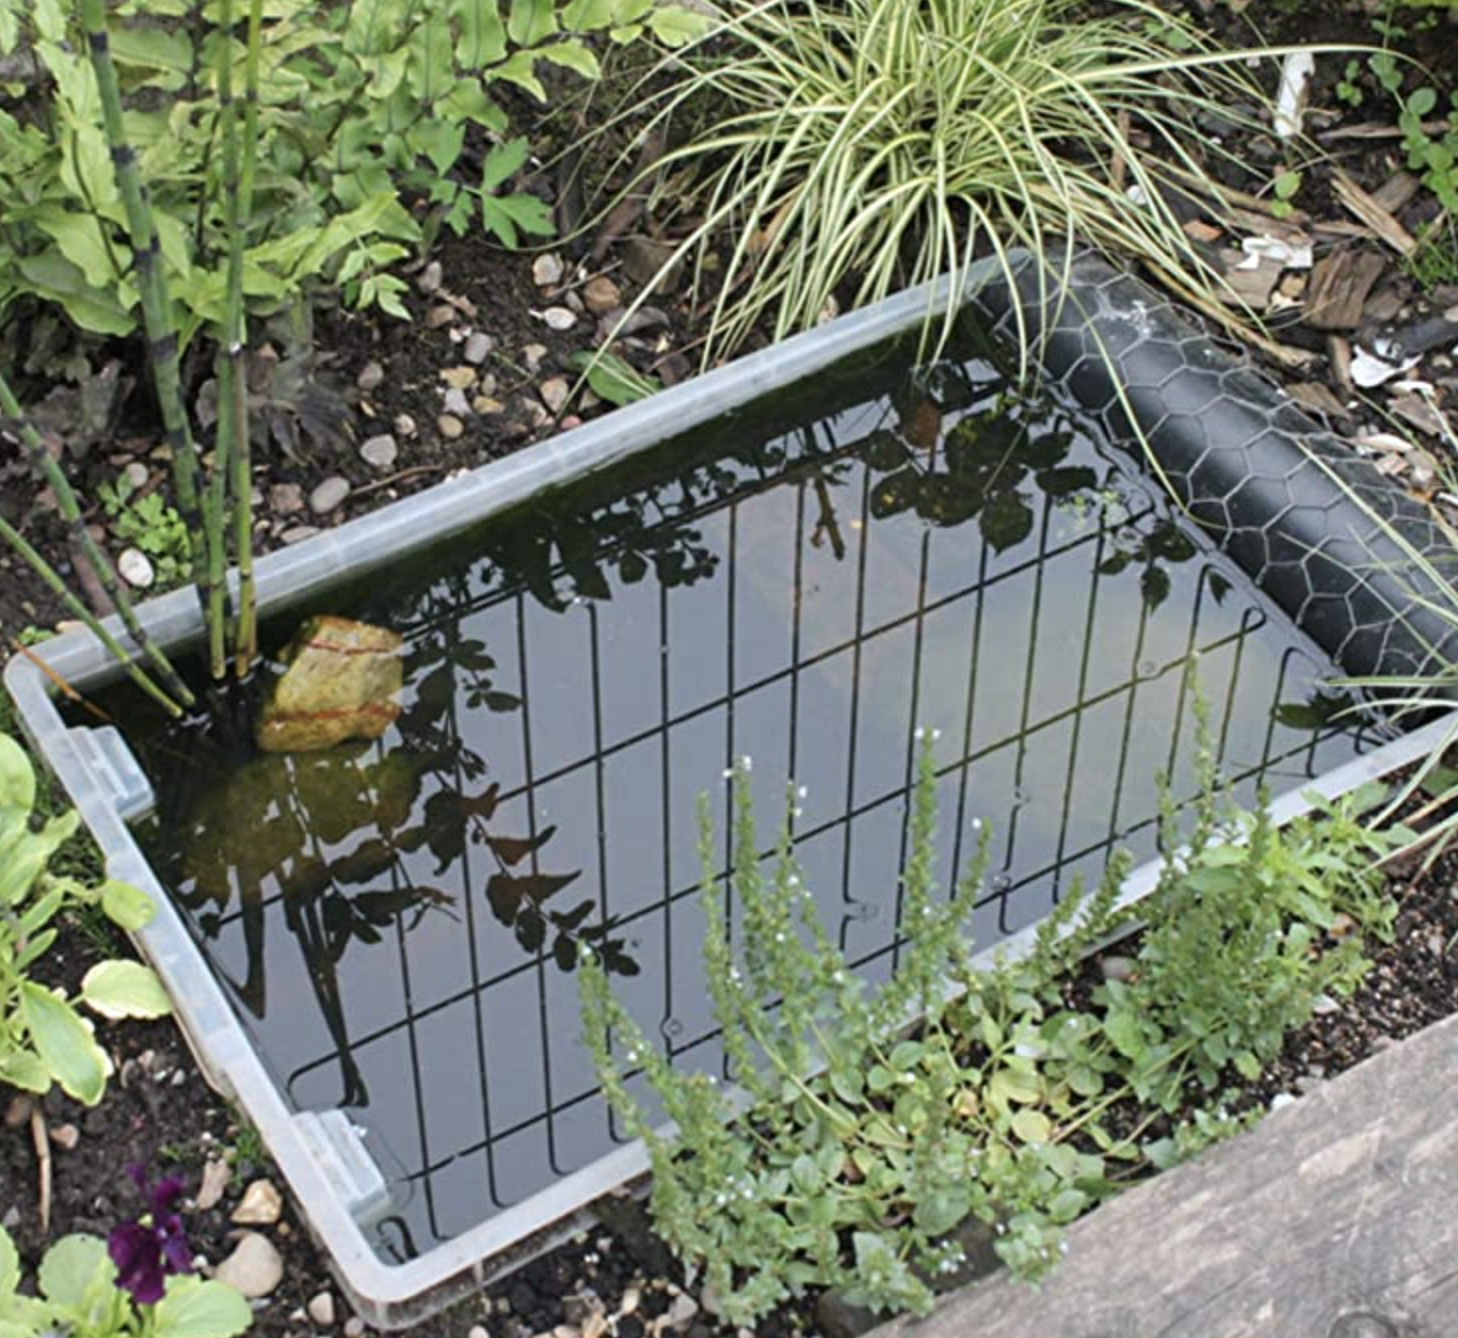 Sunken Wildlife pond made from a plastic liner